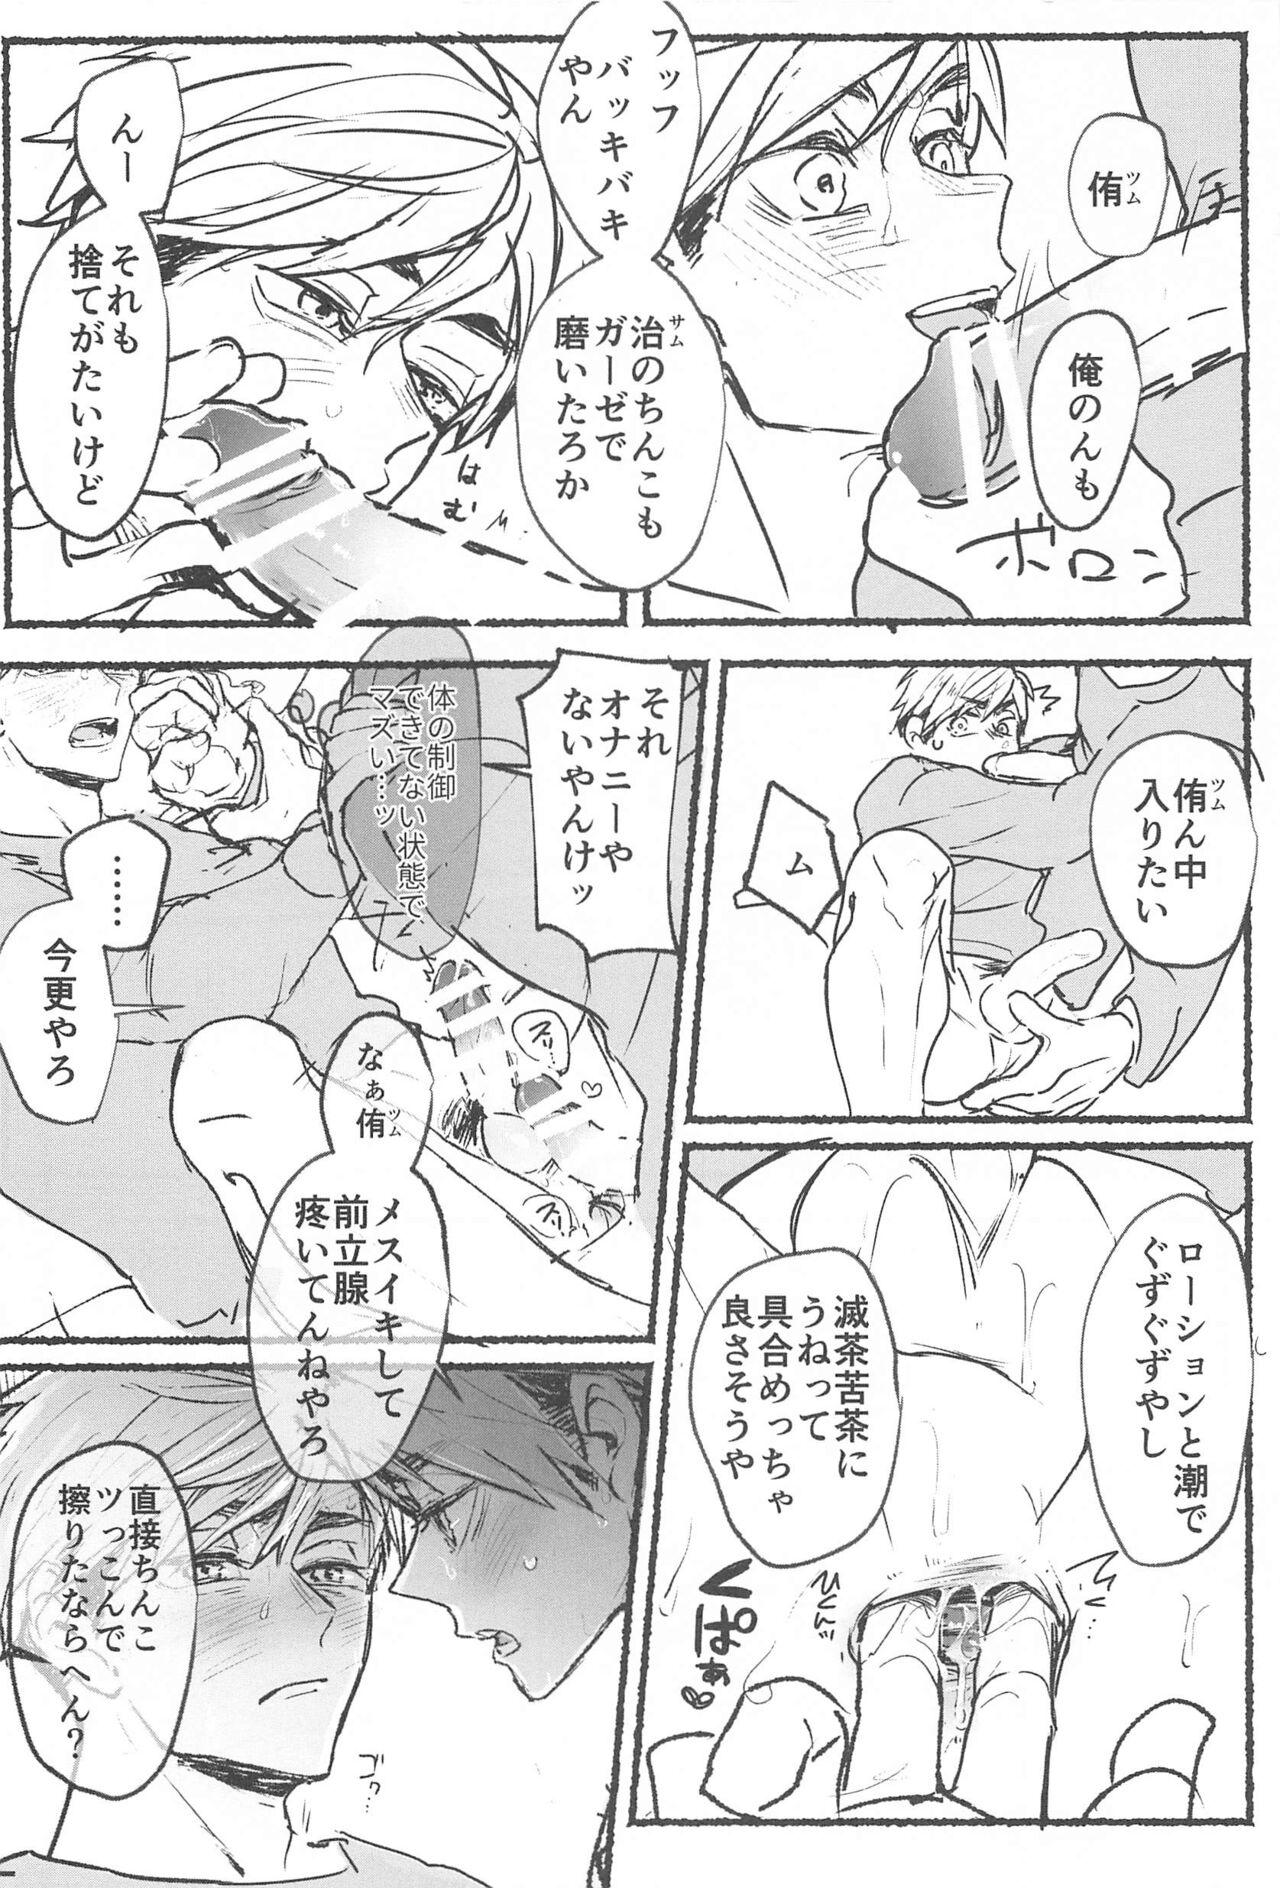 Doll nomoaroshongaze No more lotion gauze！！ - Haikyuu Femboy - Page 7